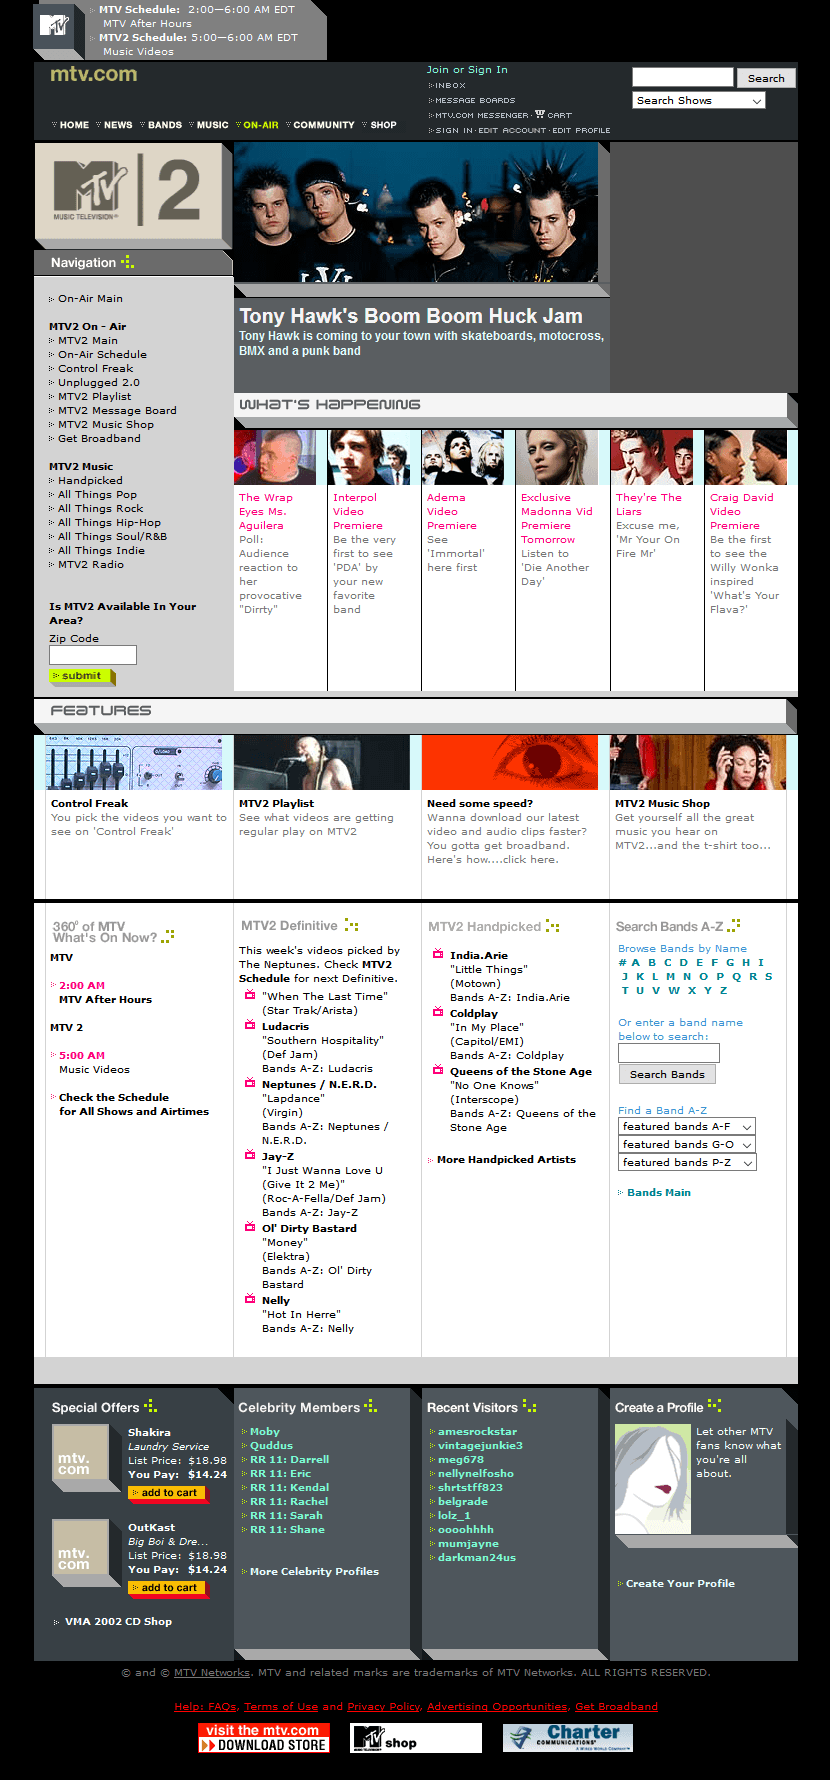 MTV OnAir website in 2002